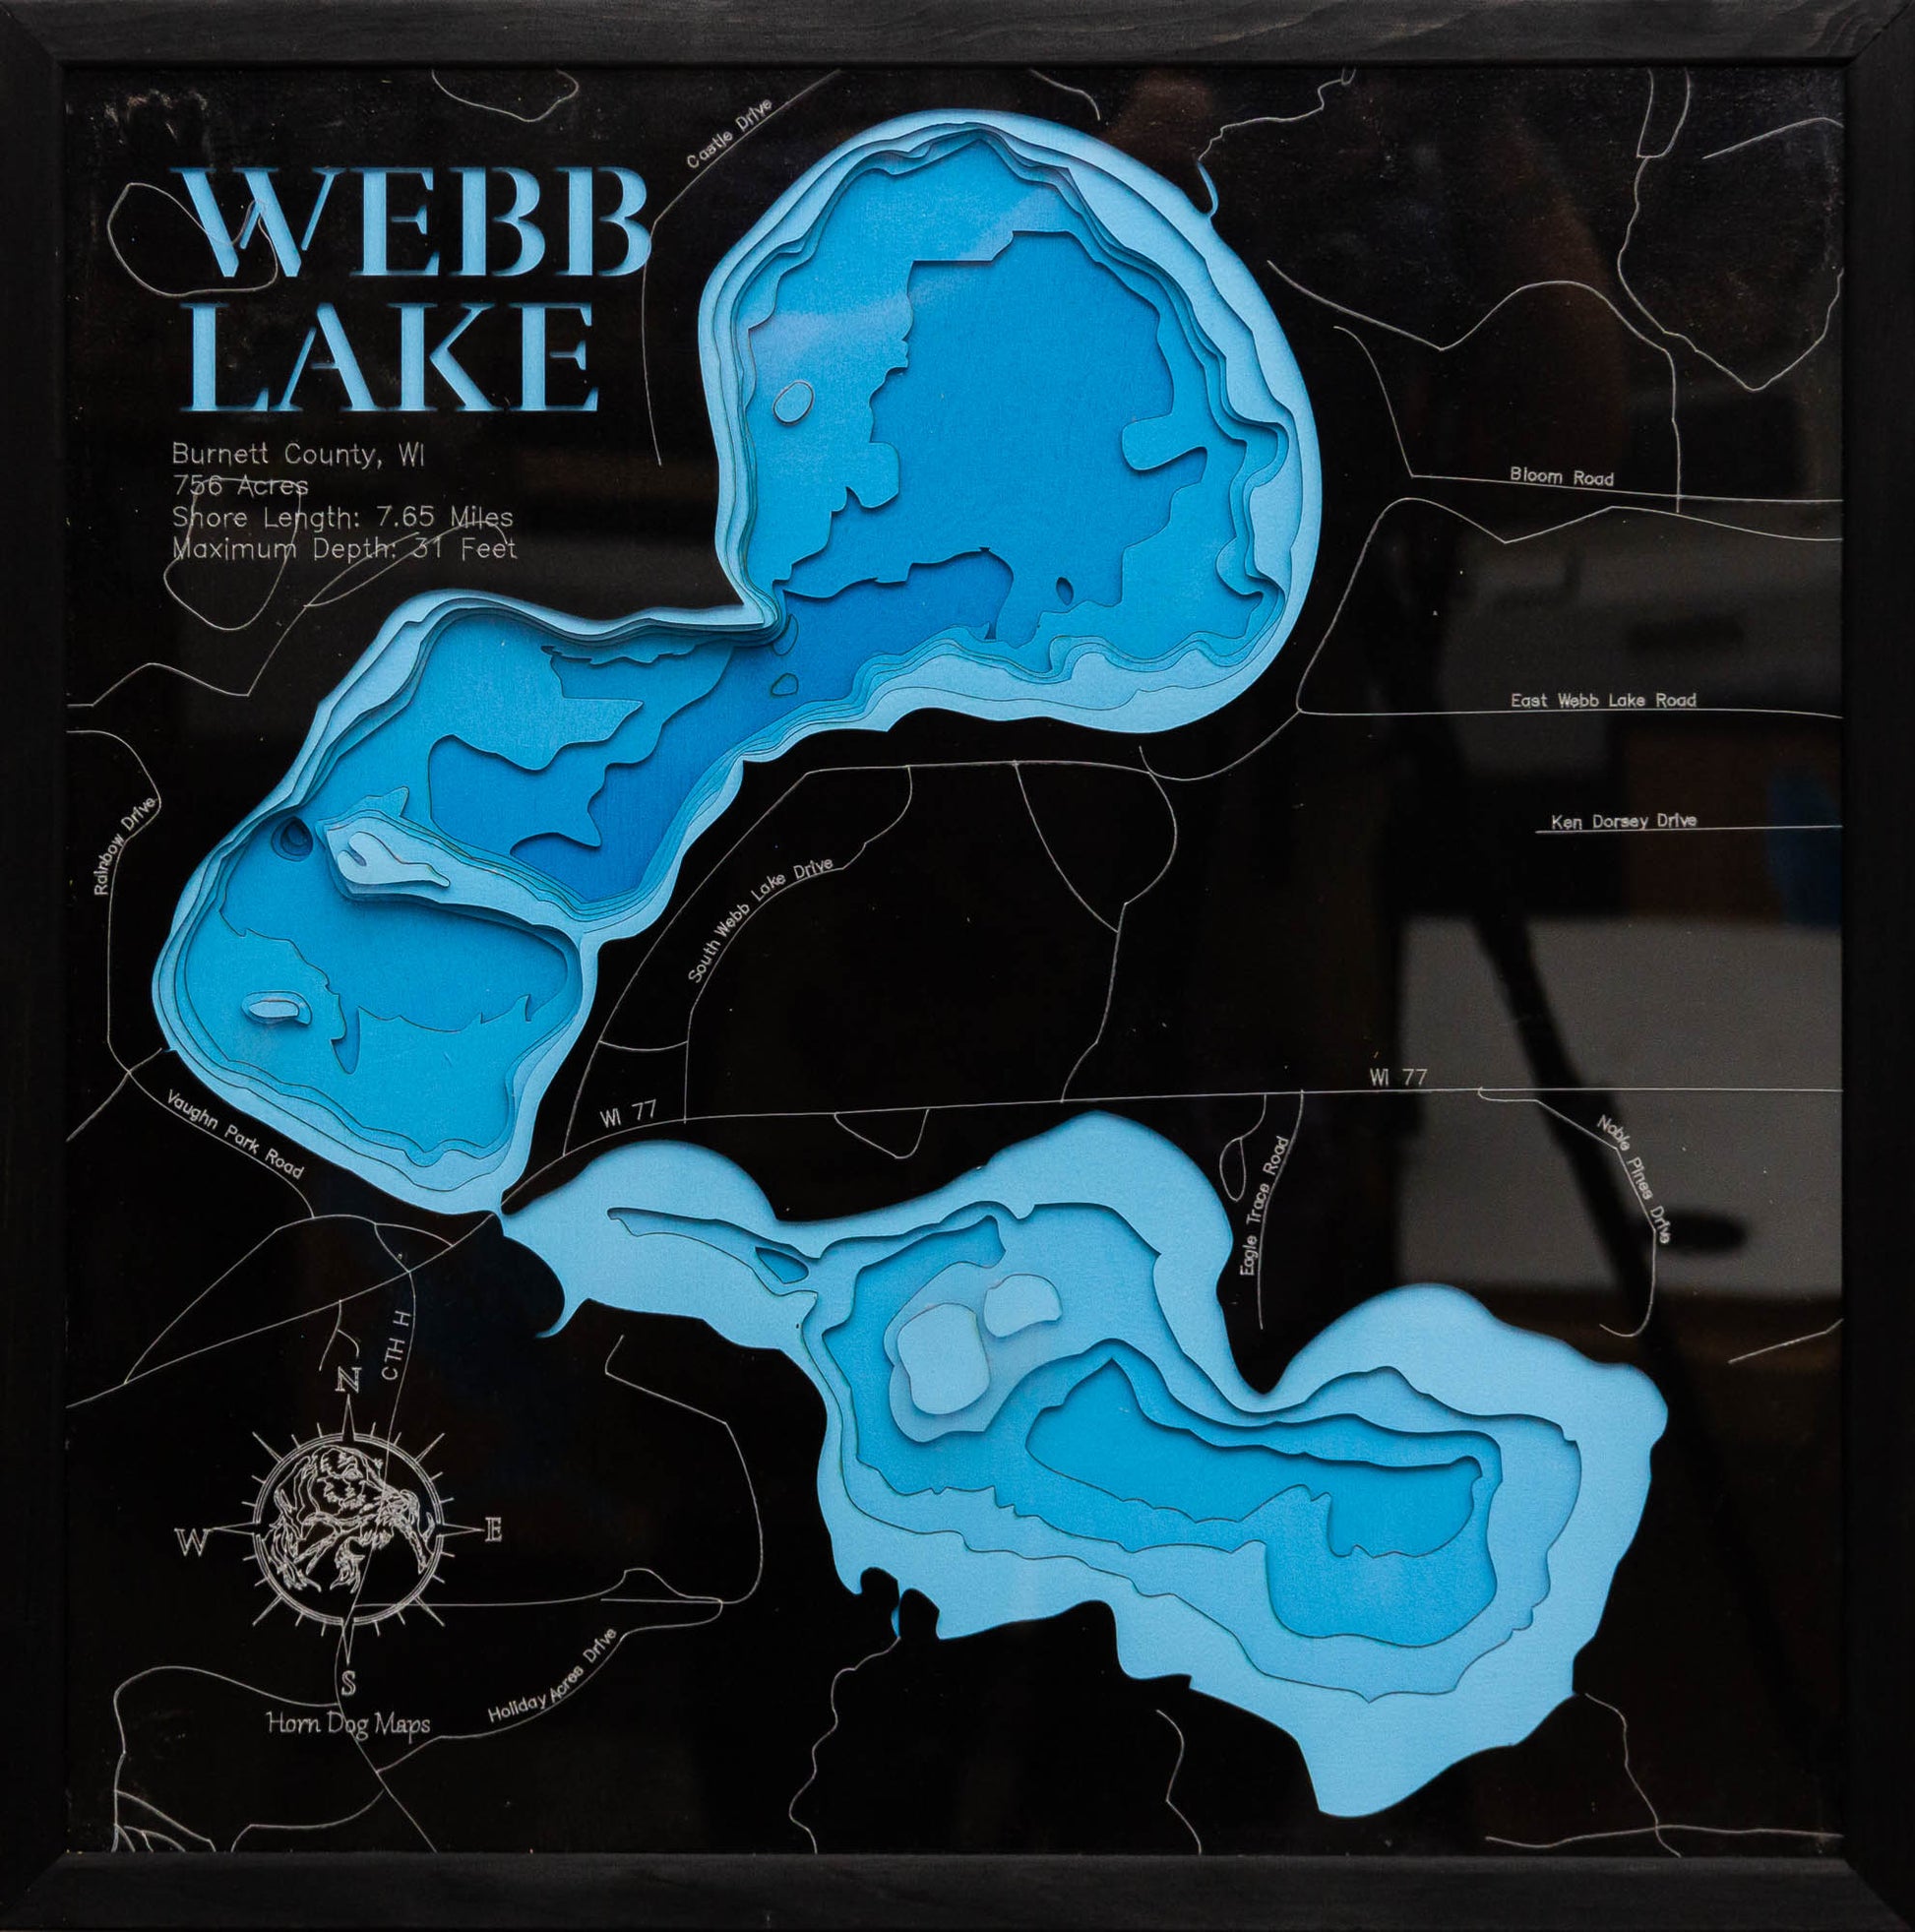 Webb Lake in Burnett County, WI